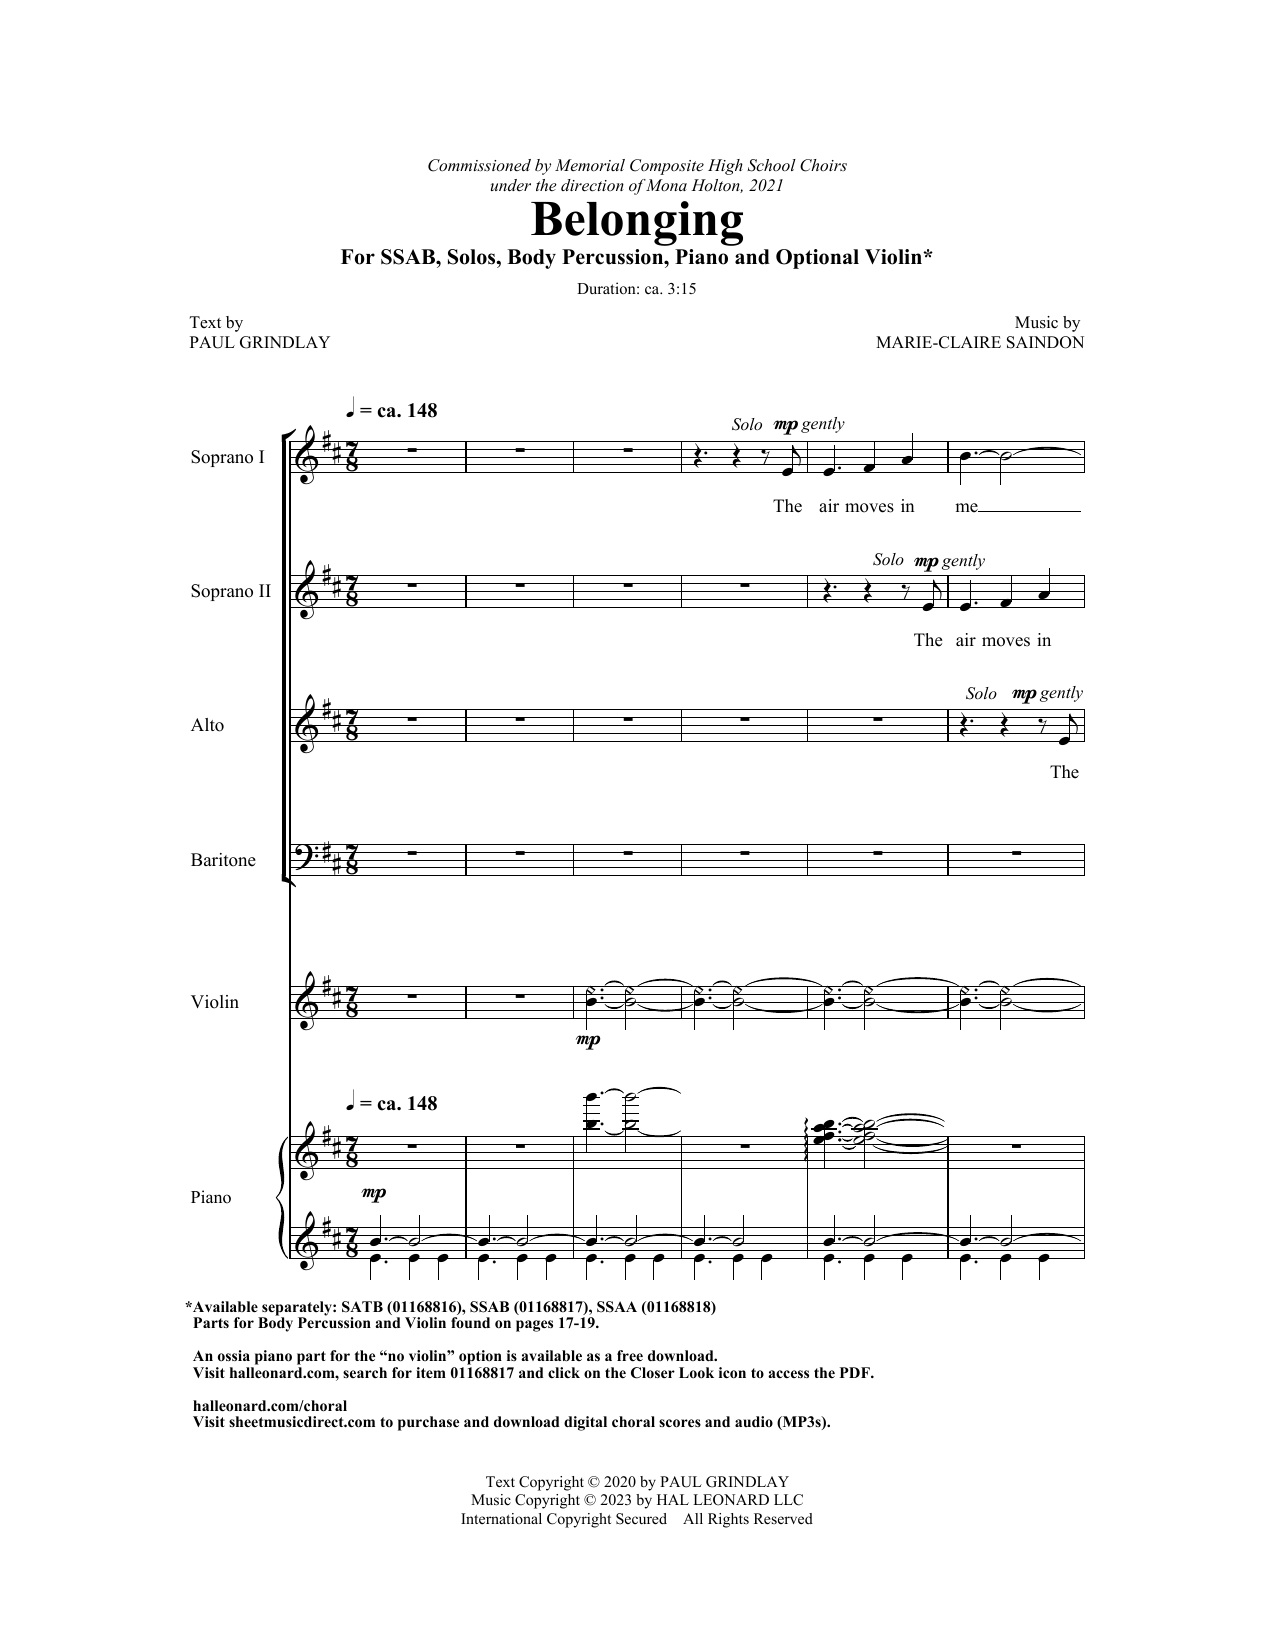 Marie-Clairé Saindon Belonging Sheet Music Notes & Chords for SSAB Choir - Download or Print PDF